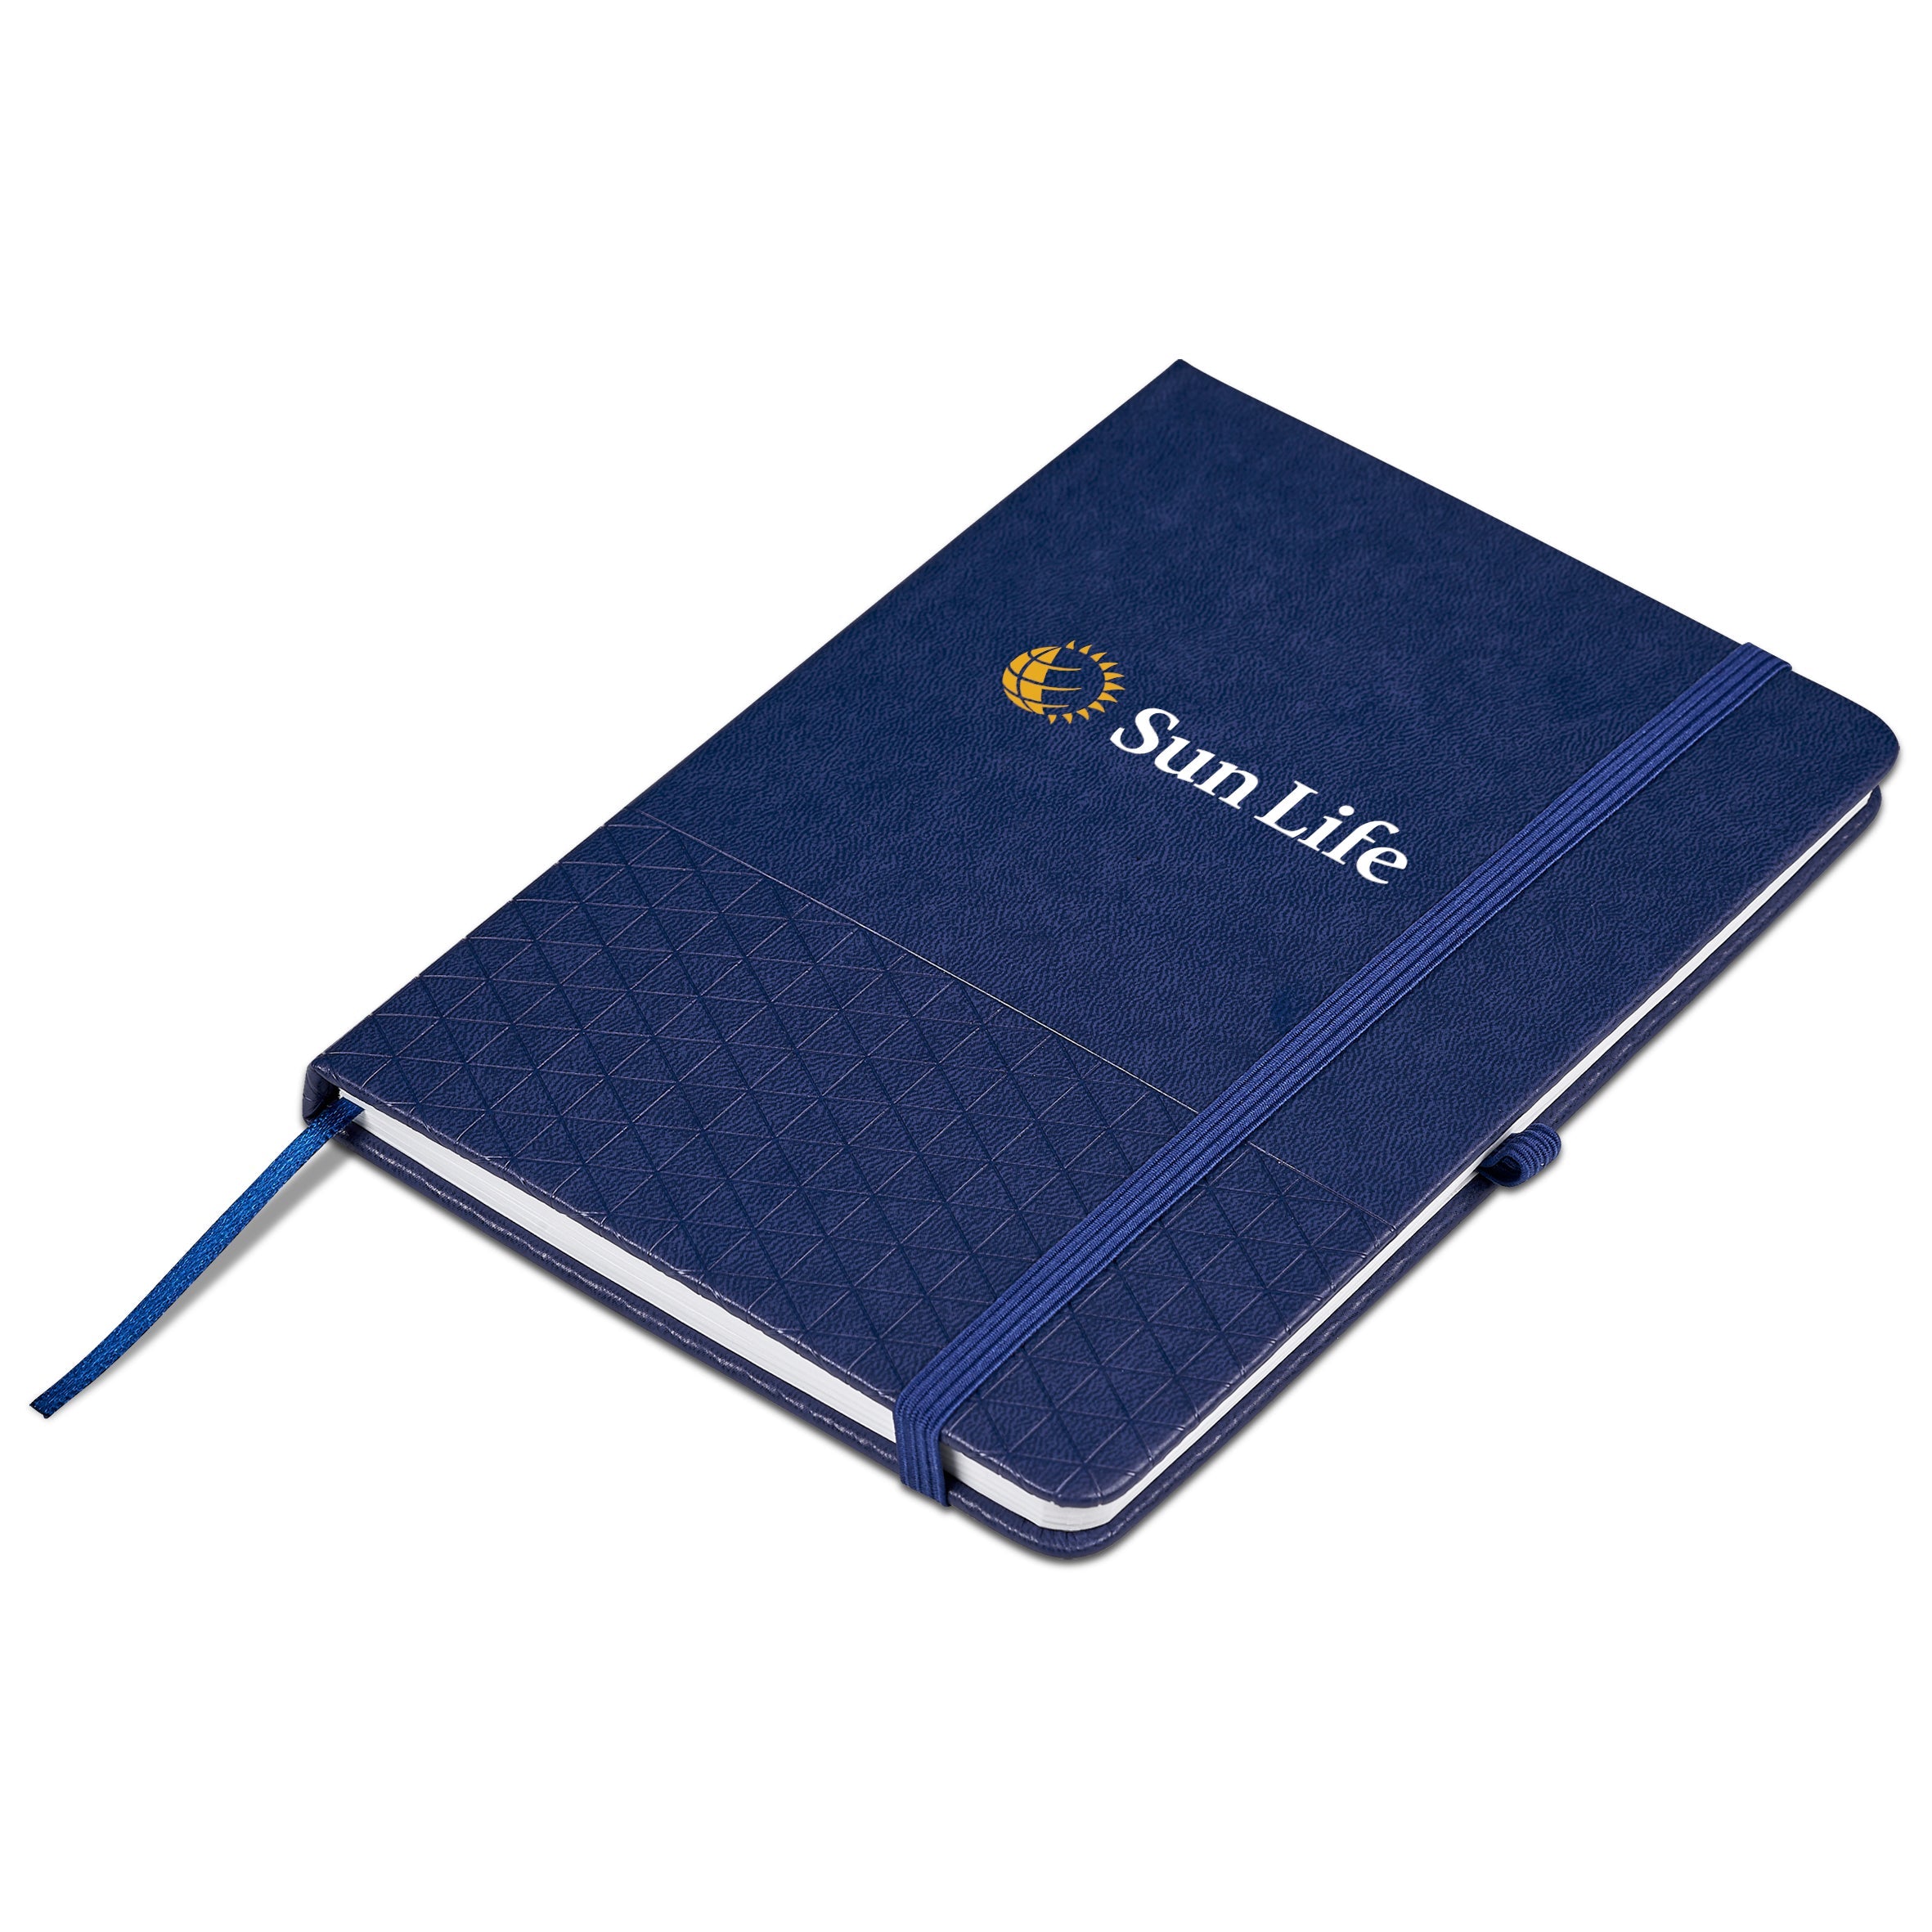 Cameo Midi Hard Cover Notebook Blue / BU - Notebooks & Notepads